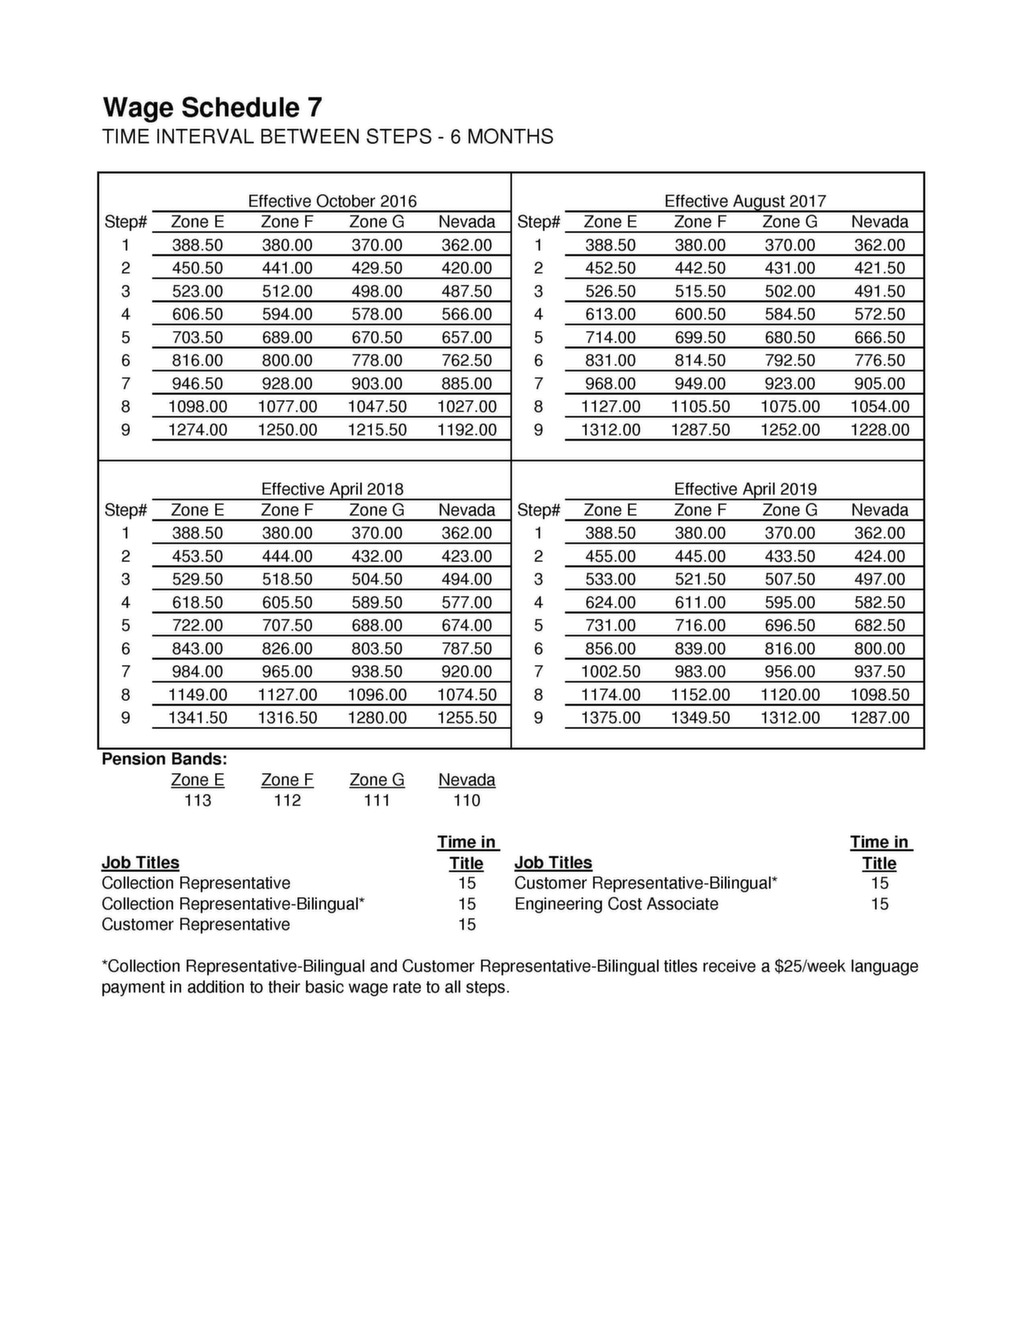 CWA/AT&T New Wage Schedules CWA 9509